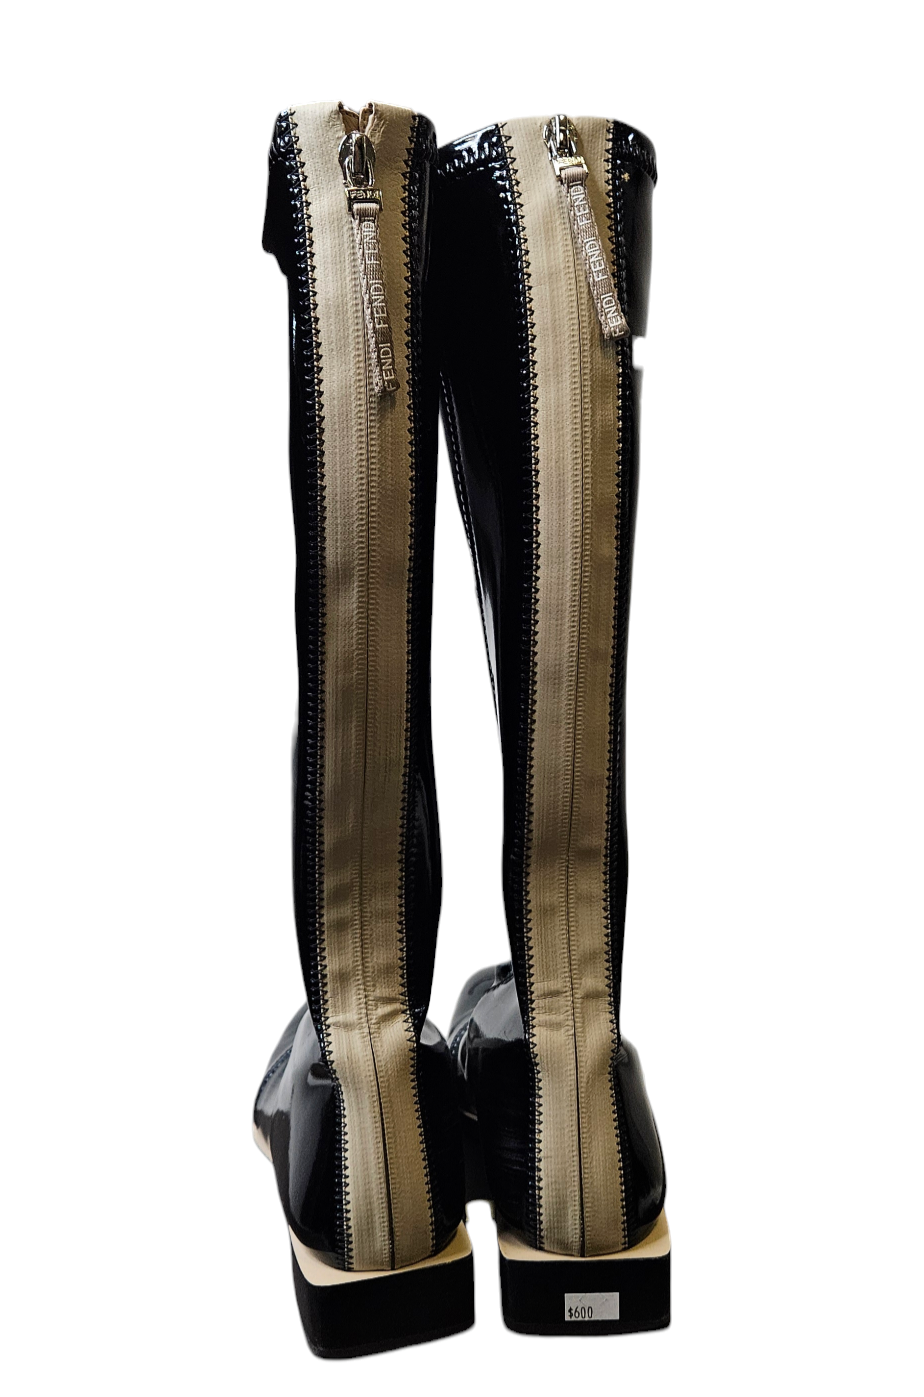 Fendi Patent Leather Calf High Riding Boots with Fendi Emblem